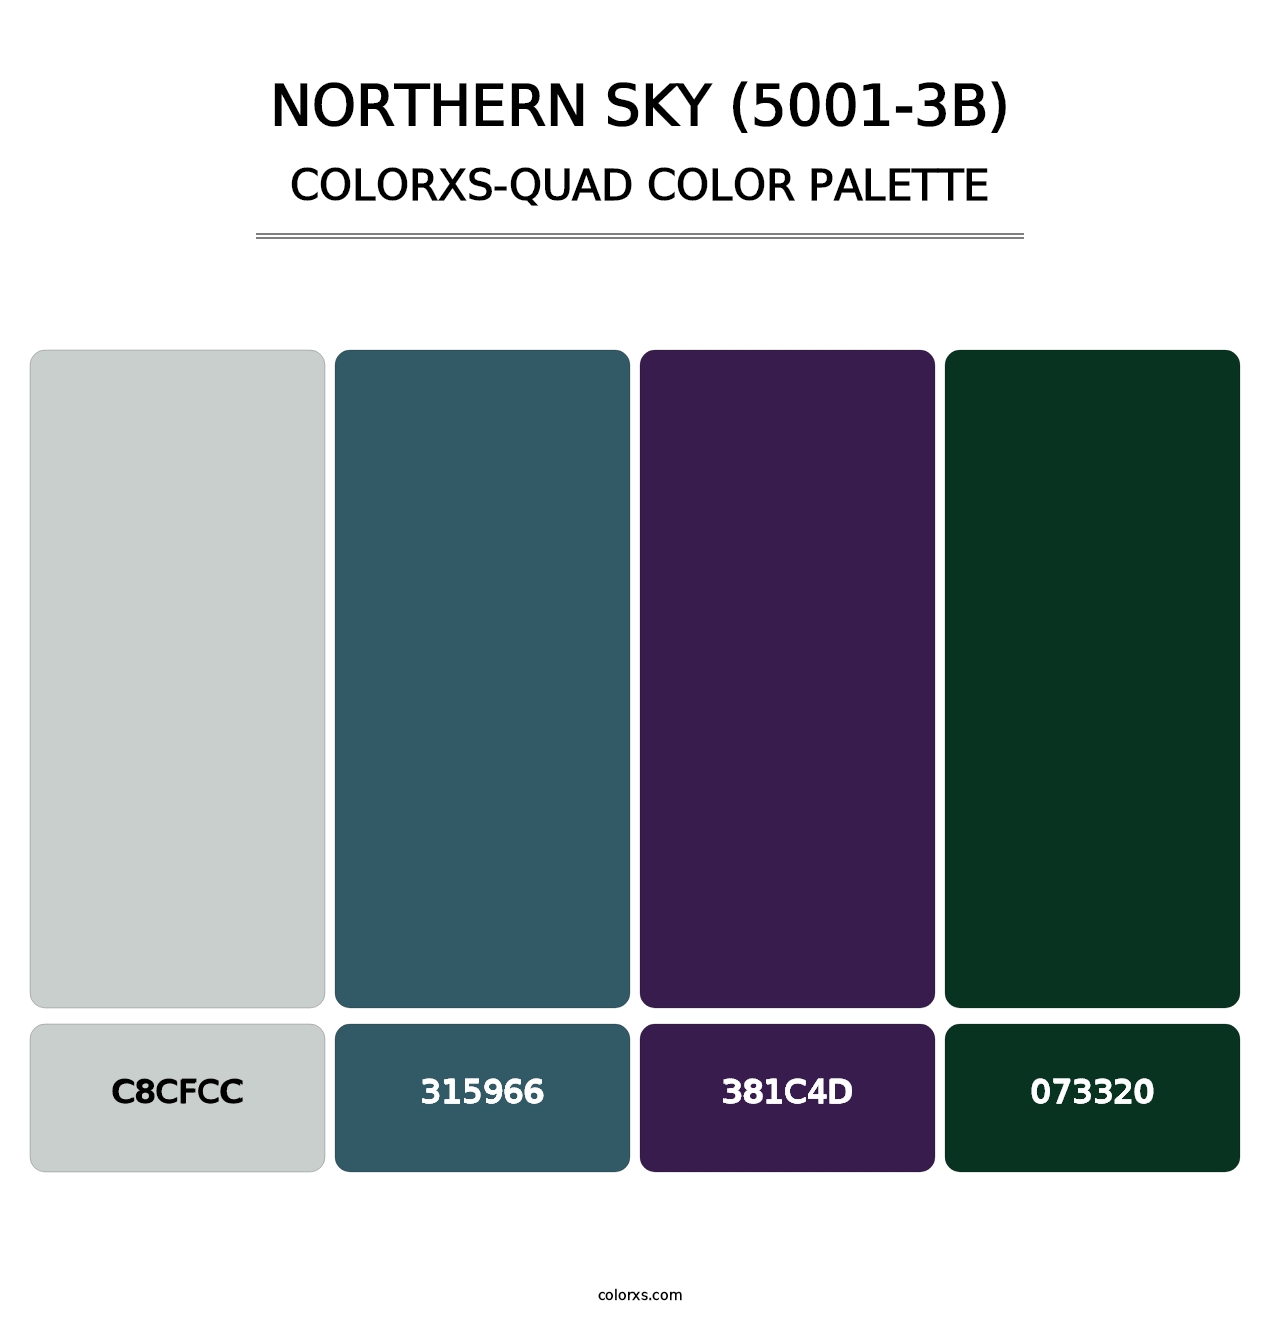 Northern Sky (5001-3B) - Colorxs Quad Palette